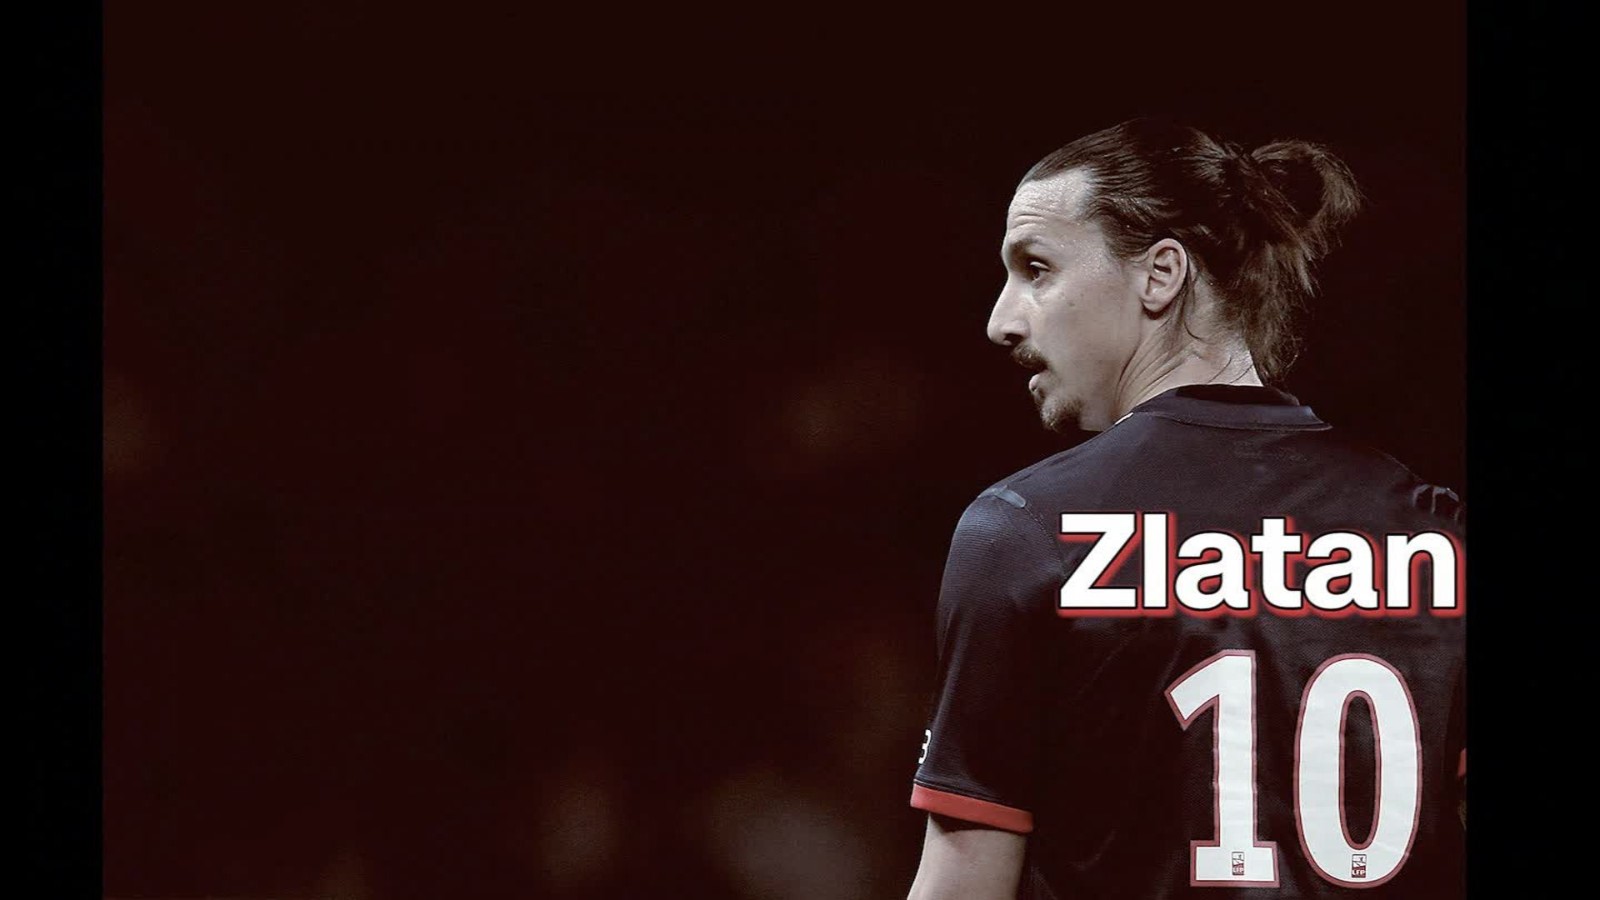 Zlatan Ibrahimovic to join Manchester United - CNN